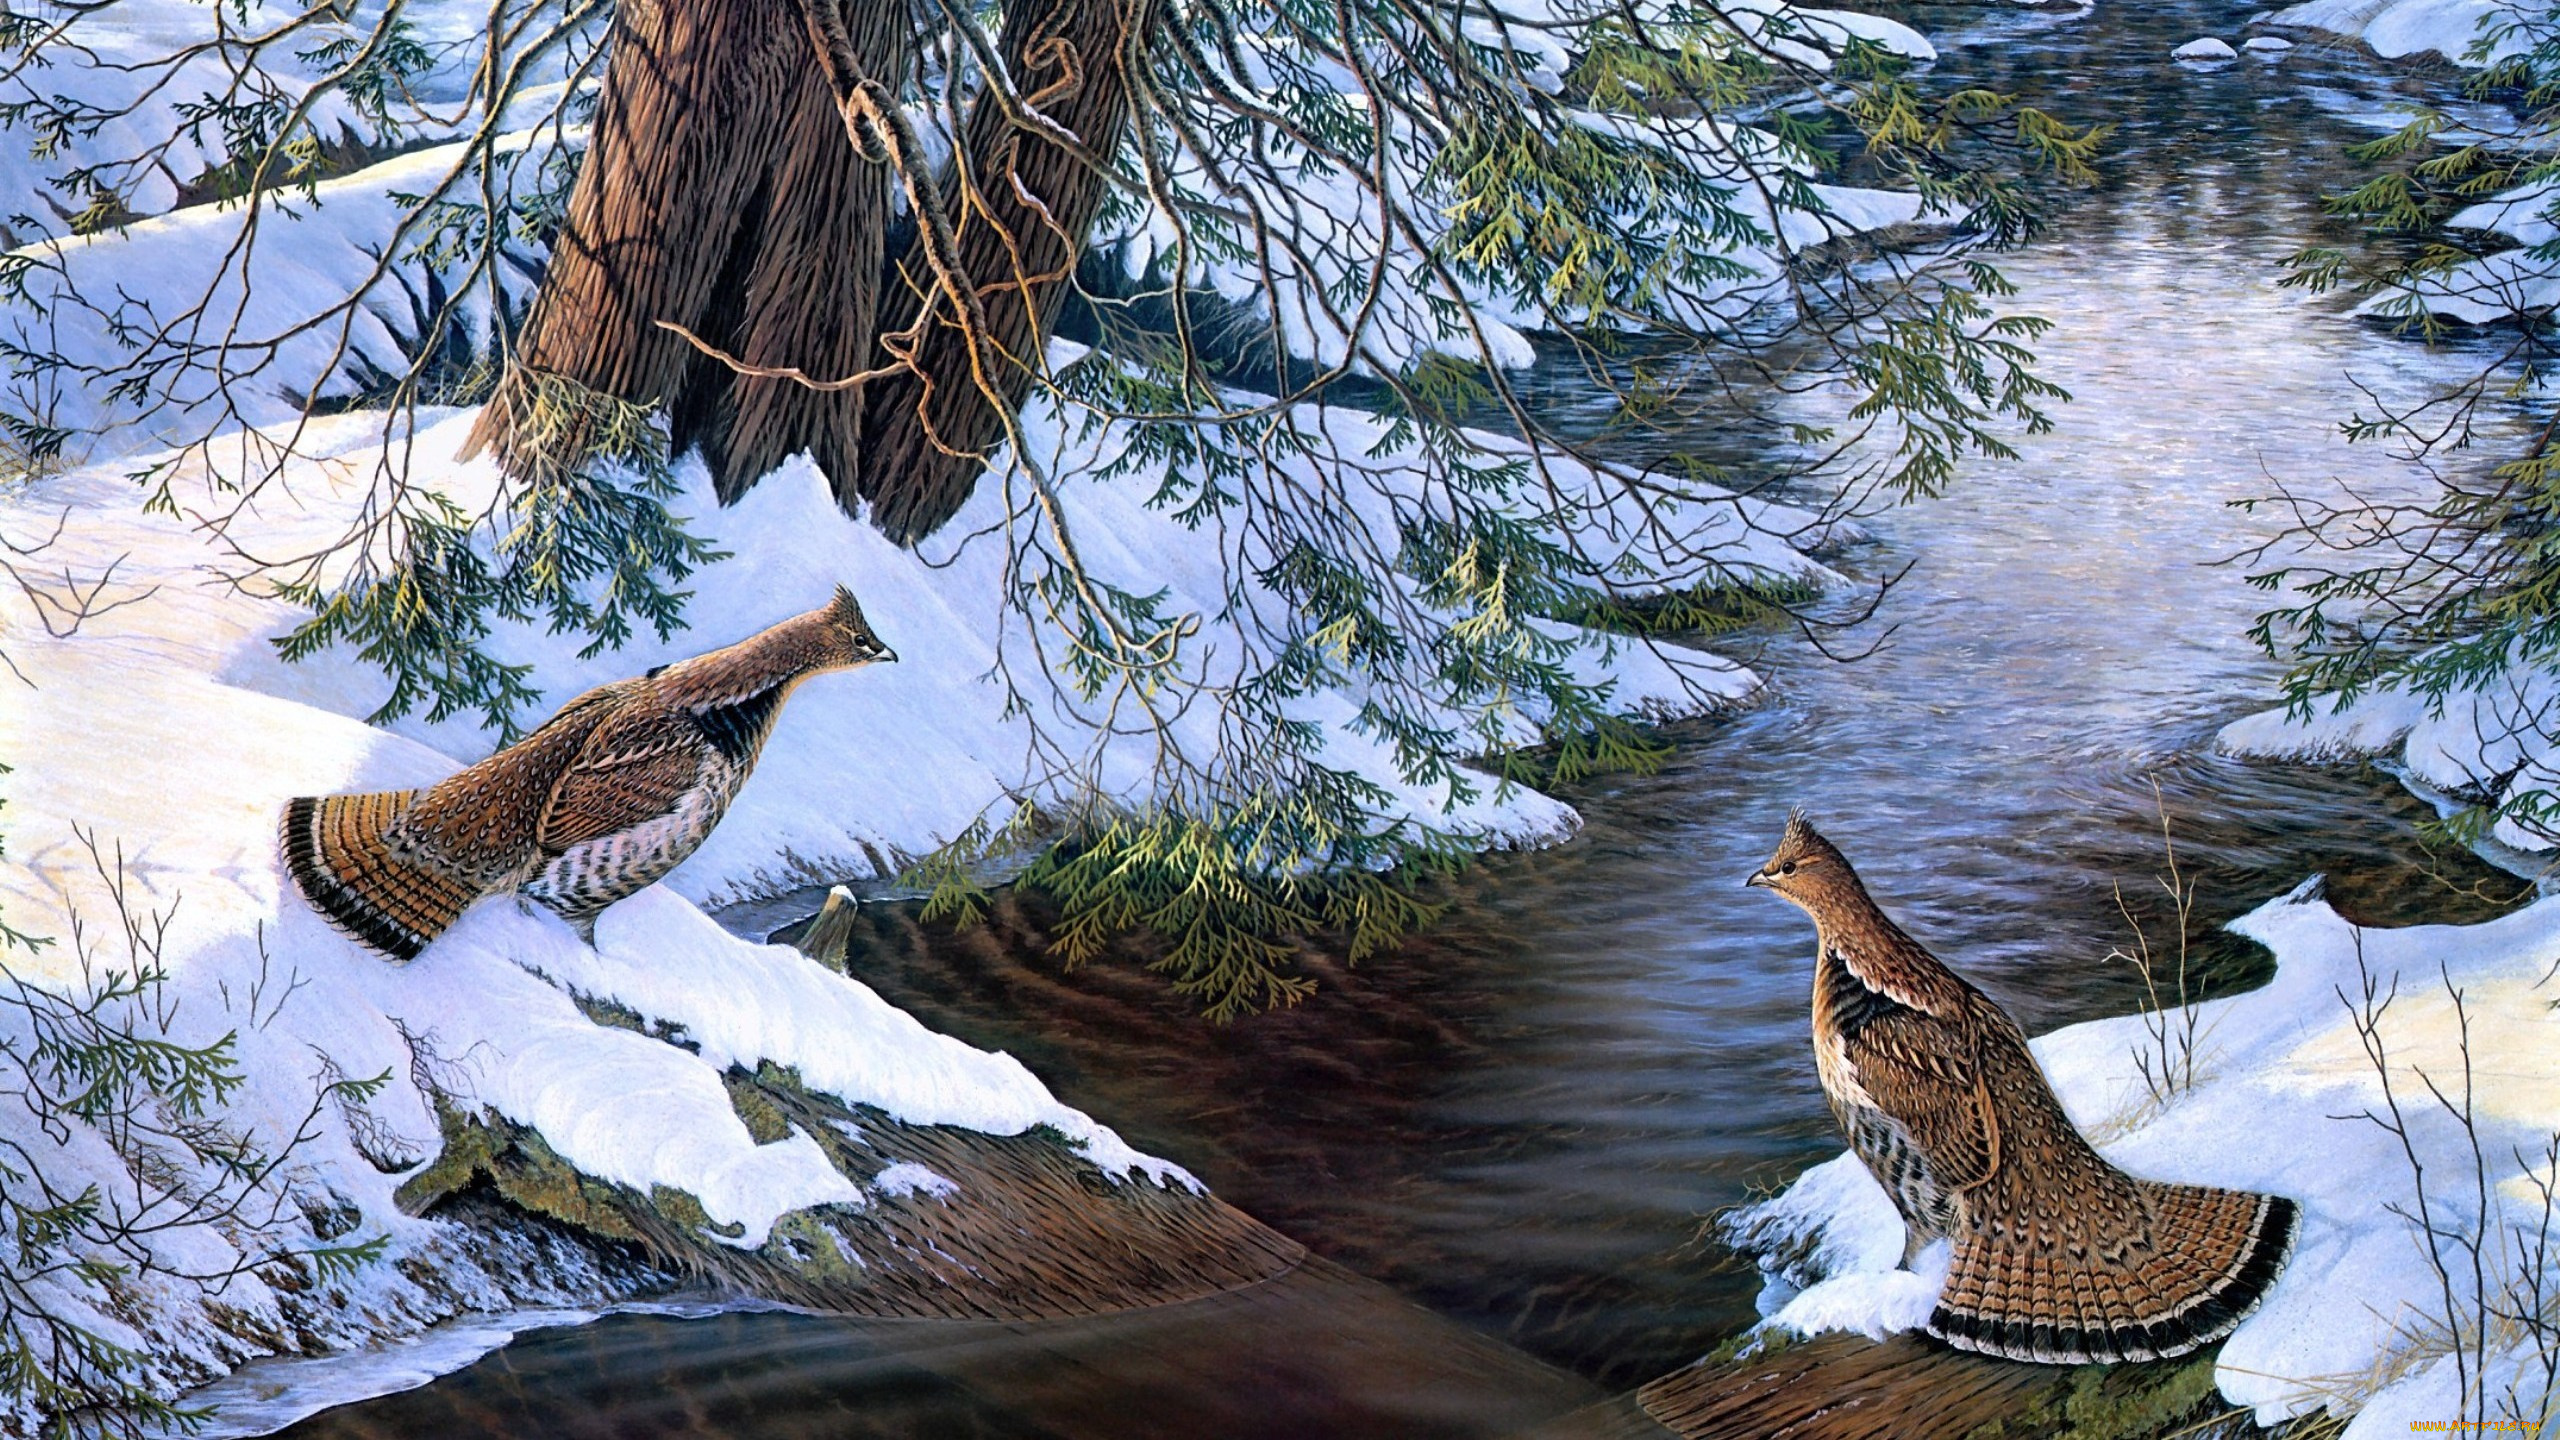 chance, encounter, рисованные, sam, timm, птицы, снег, река